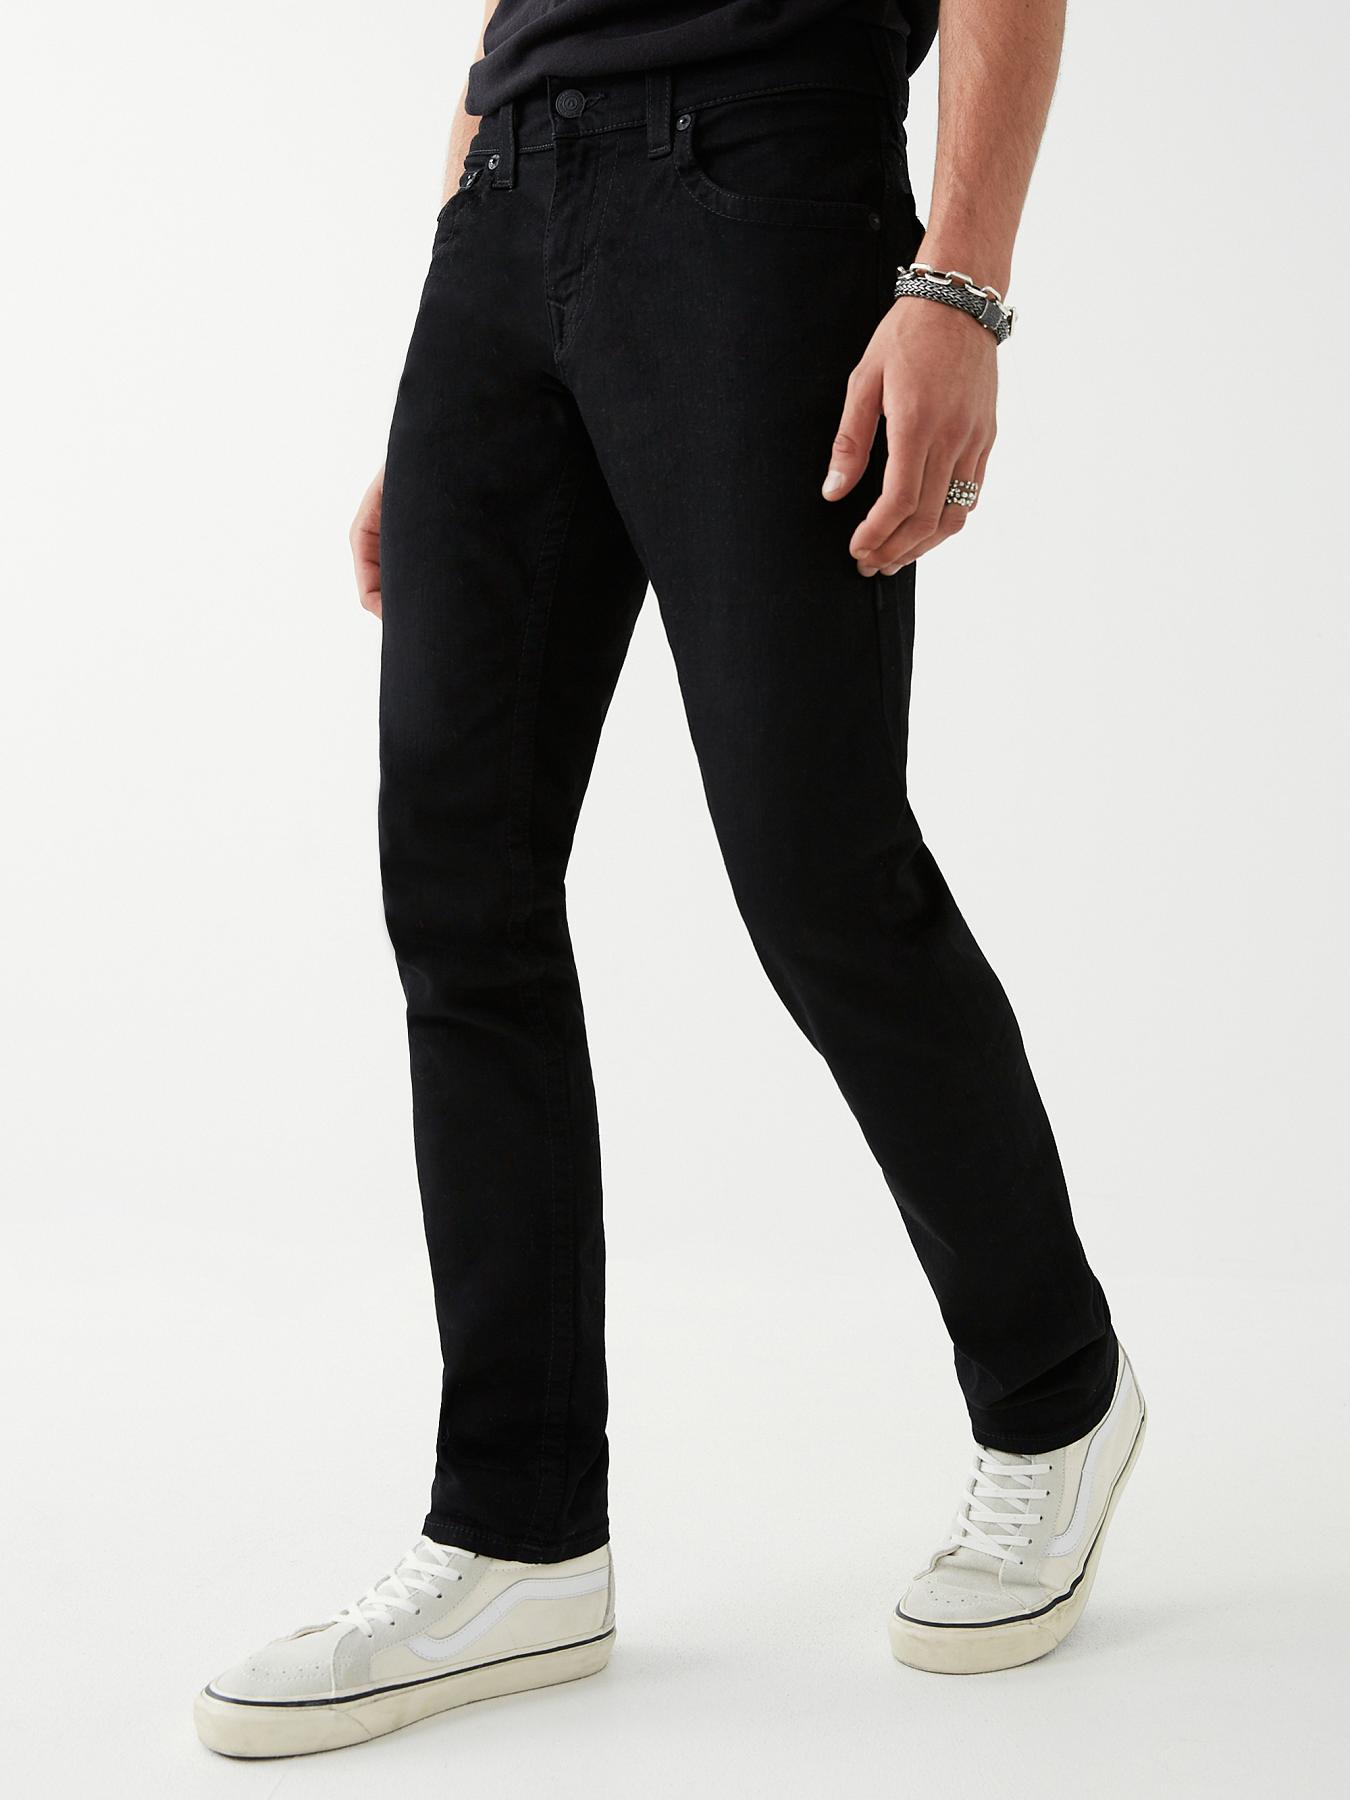 Plus Size Men's Fall Trousers New Ami Jeans Men's Slim Stretch